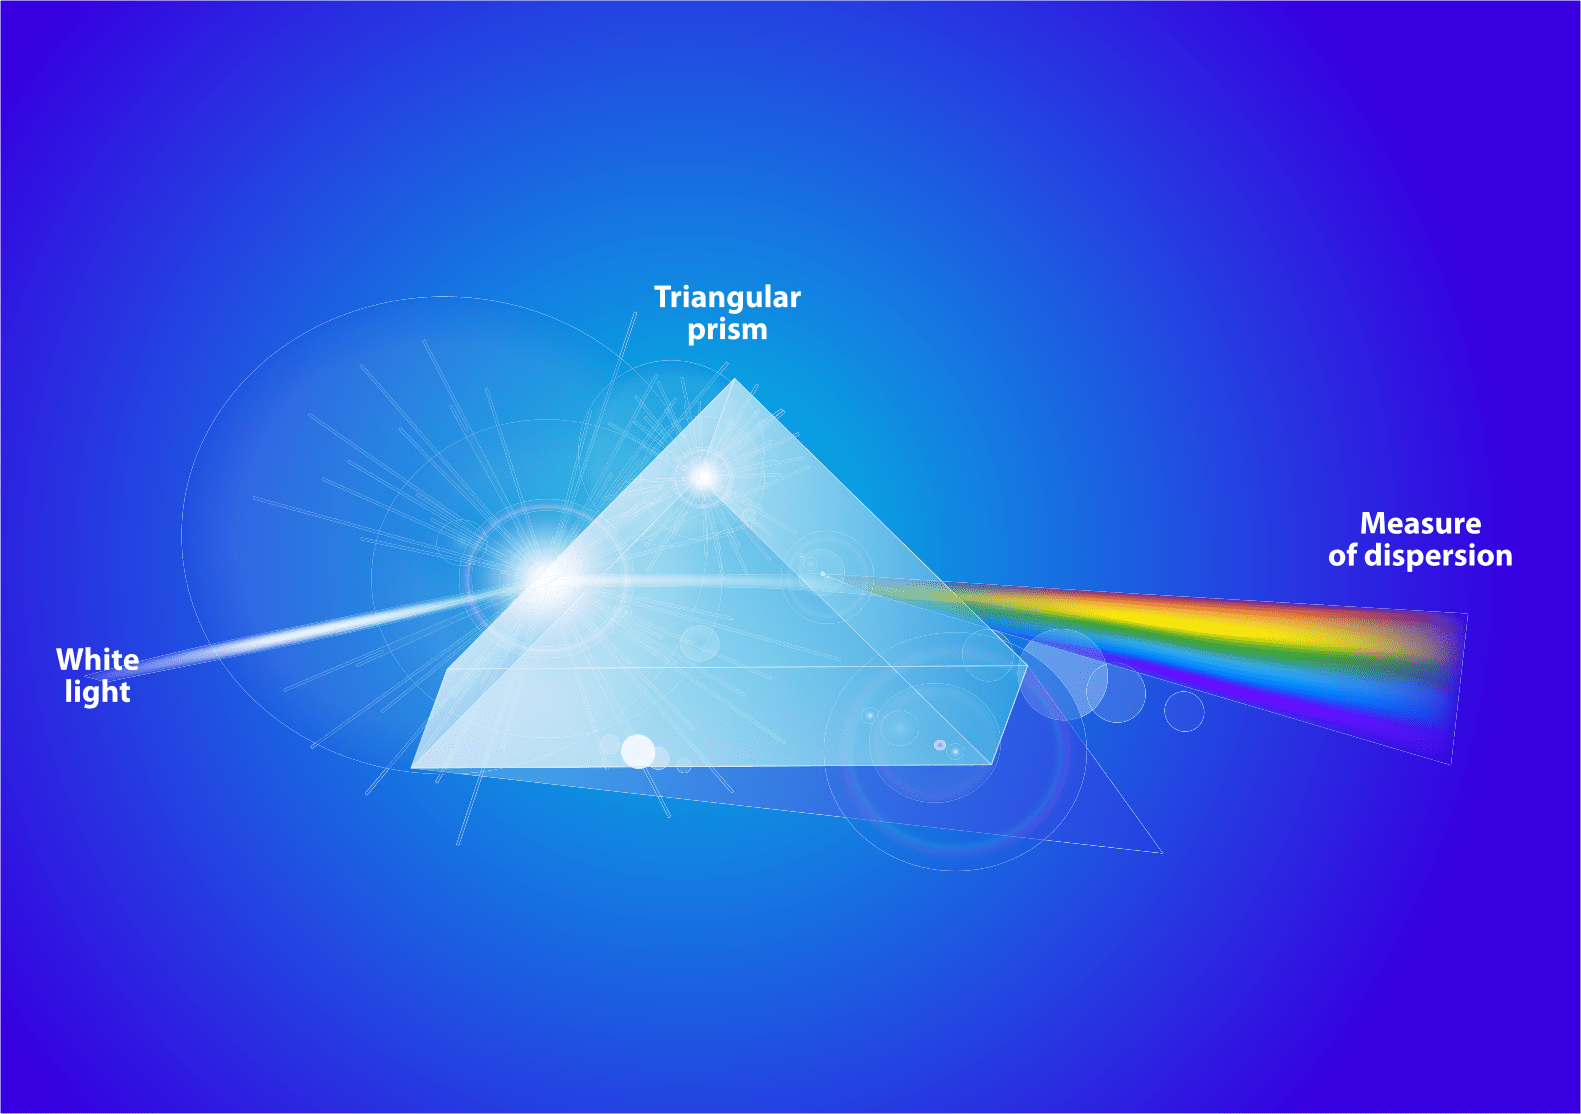 A prism splits visible light into the familiar rainbow spectrum.